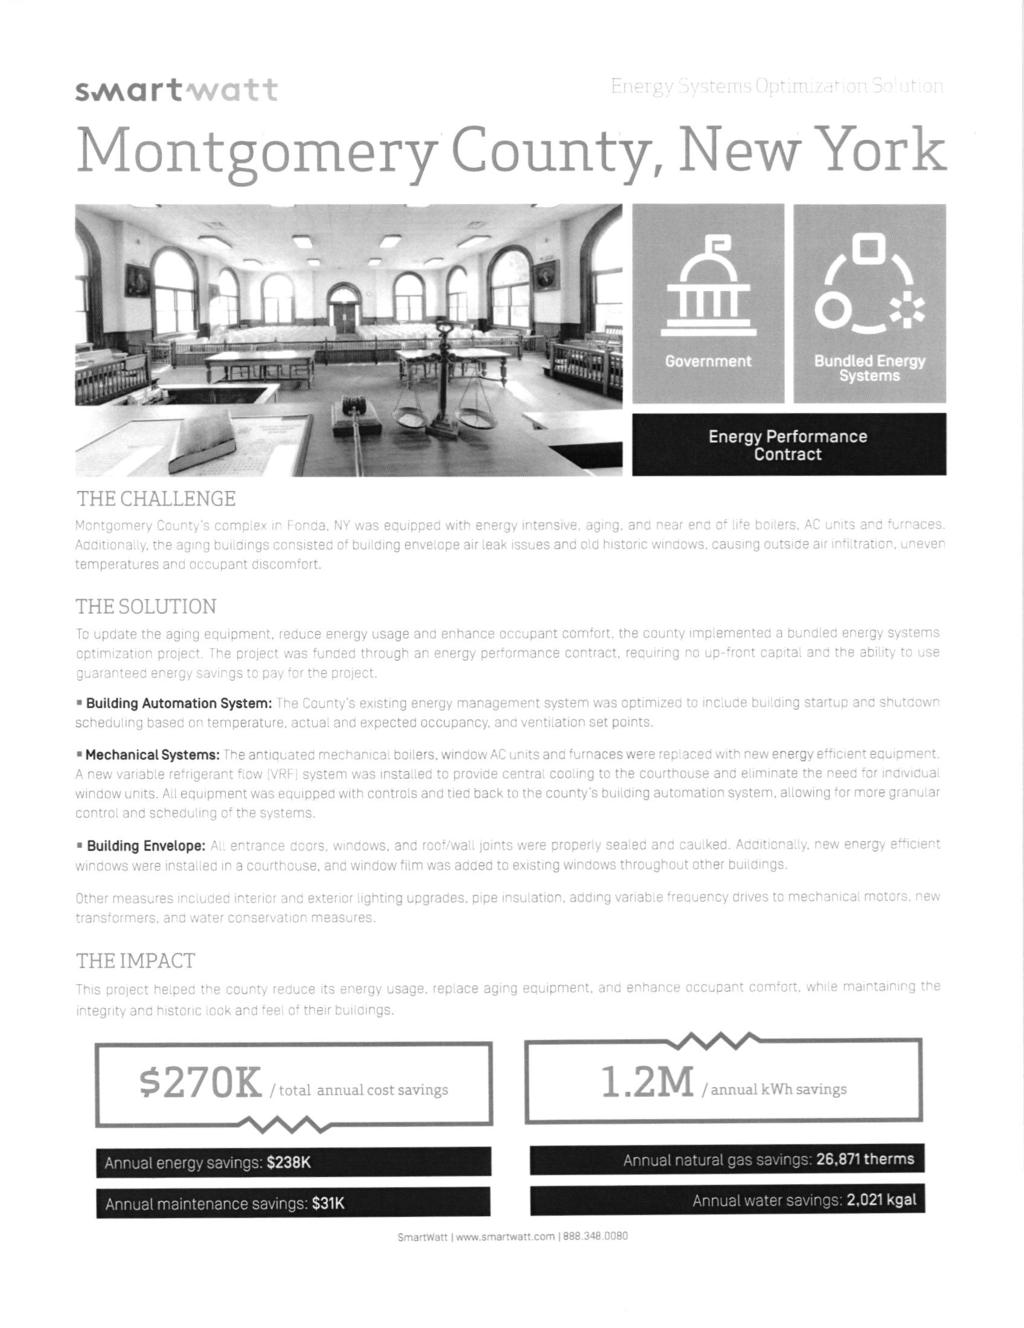 s,mortwott Montgomery County NewYork I I t:i ntnt rbt o-:ll THE CHLLENGE r-,-l m F-'il 1 l'.ontgomery Ccunty's complex in Fonda. NY was eq!